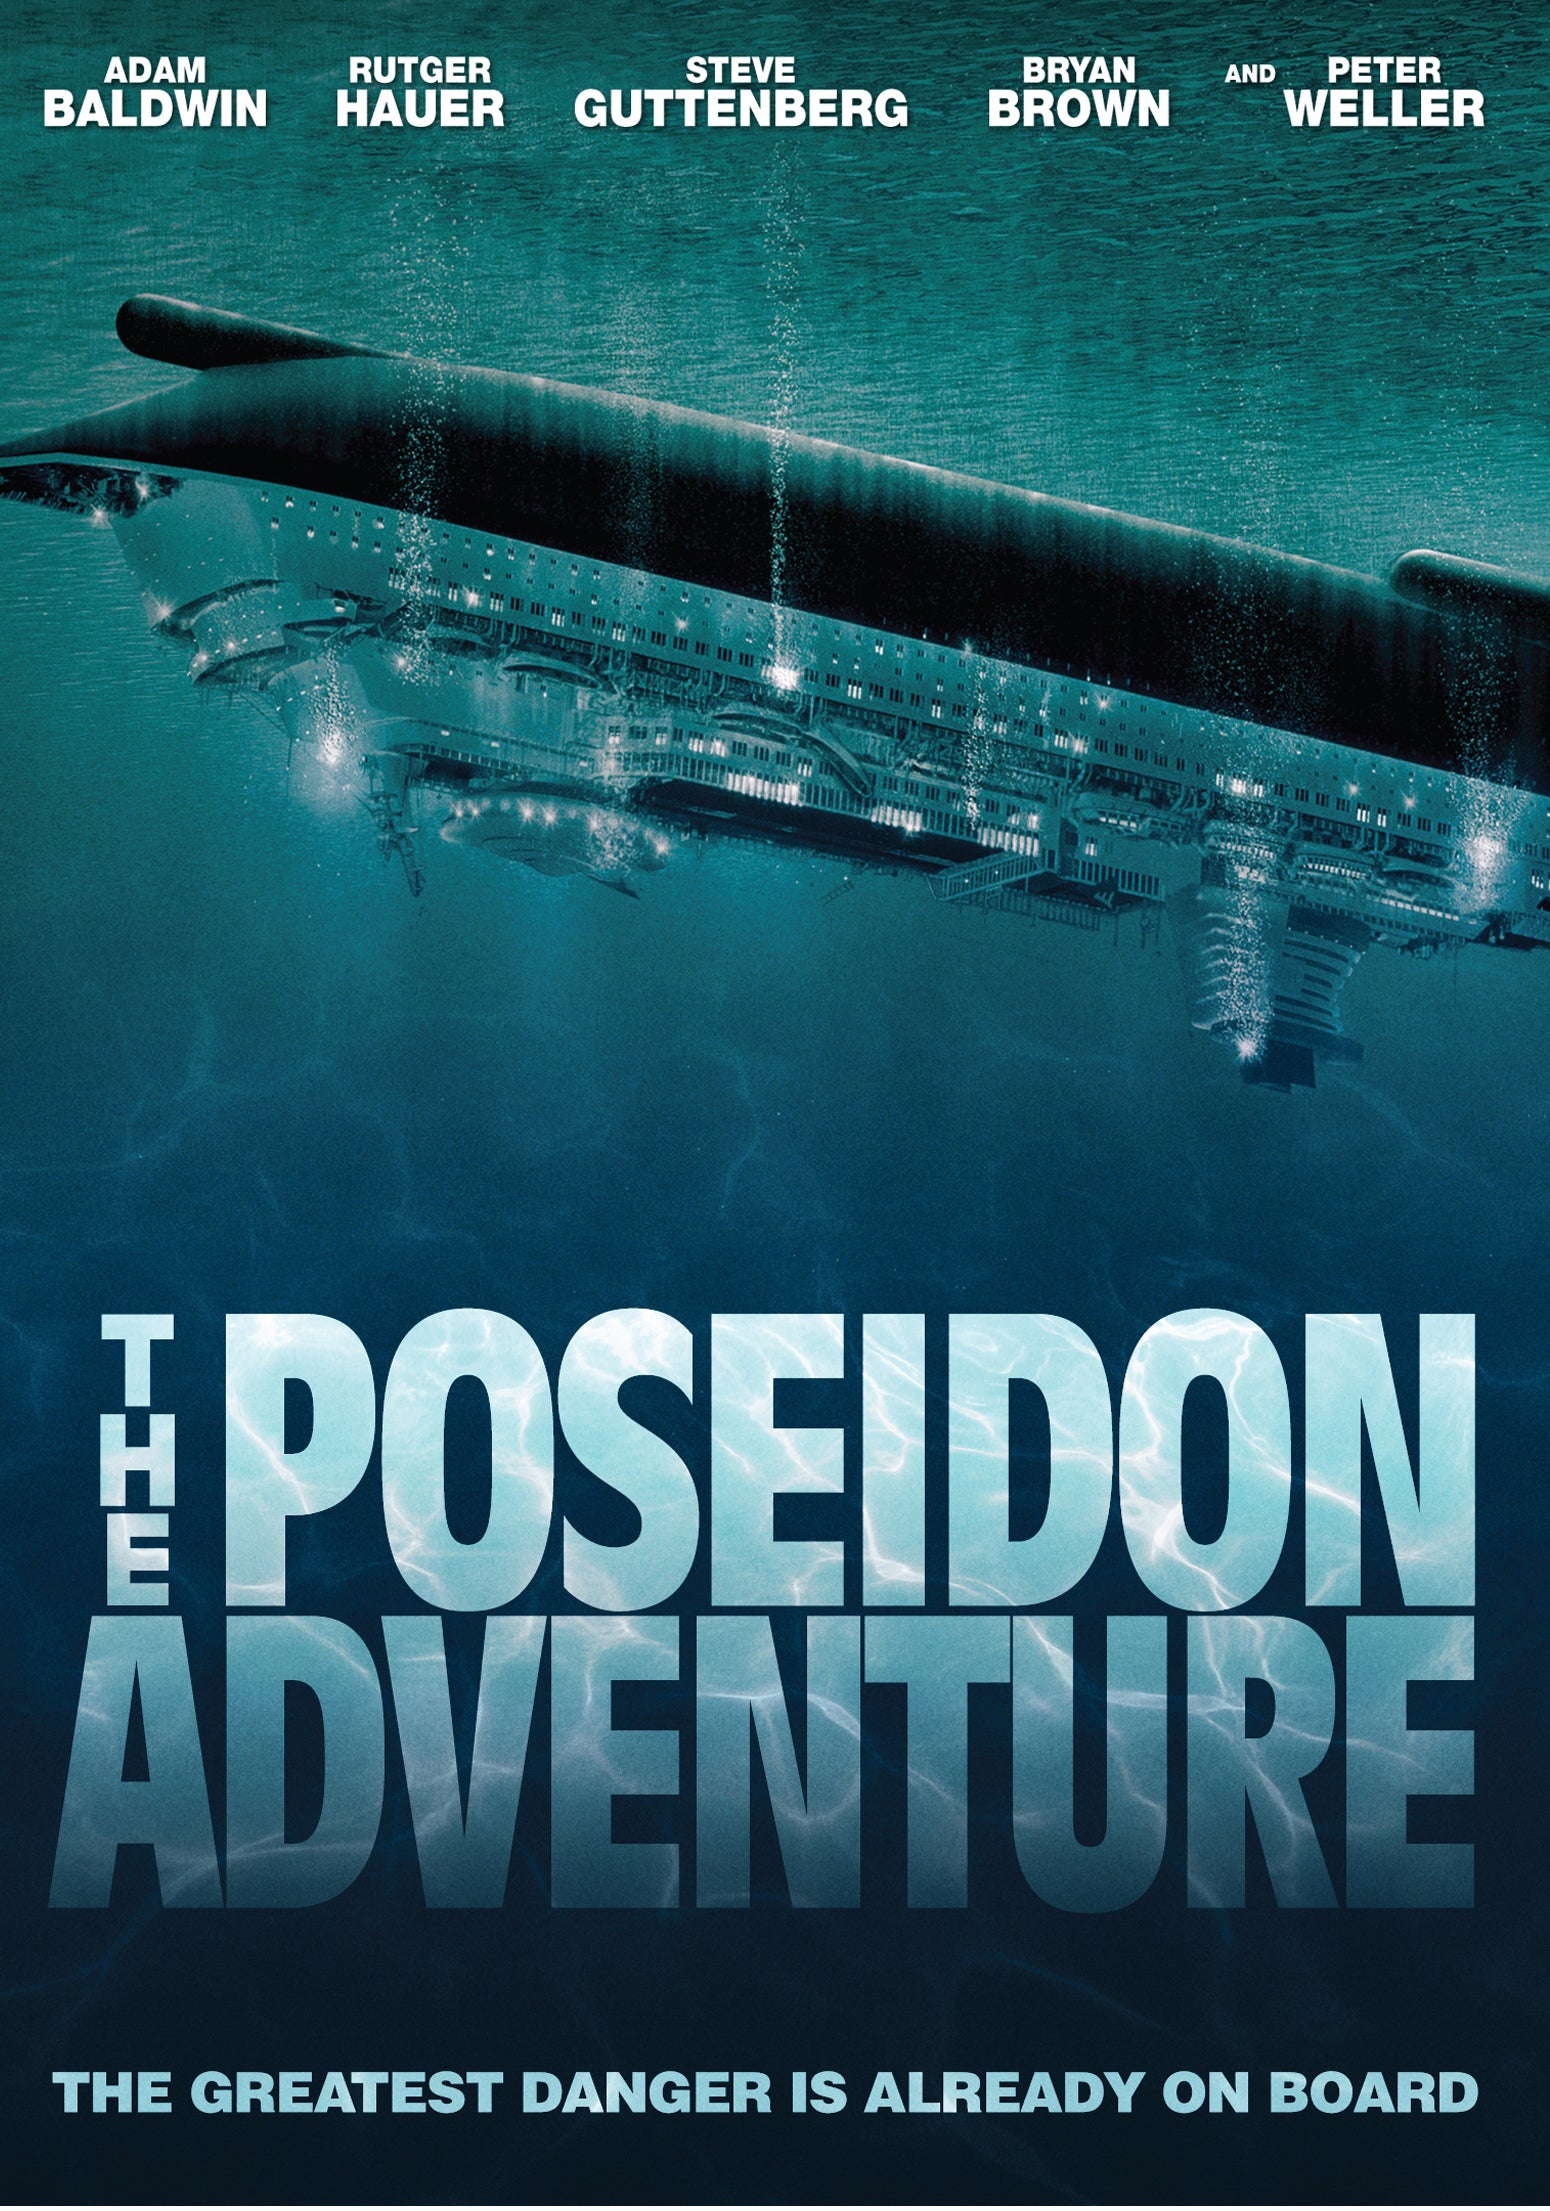 Poseidon Adventure cover art